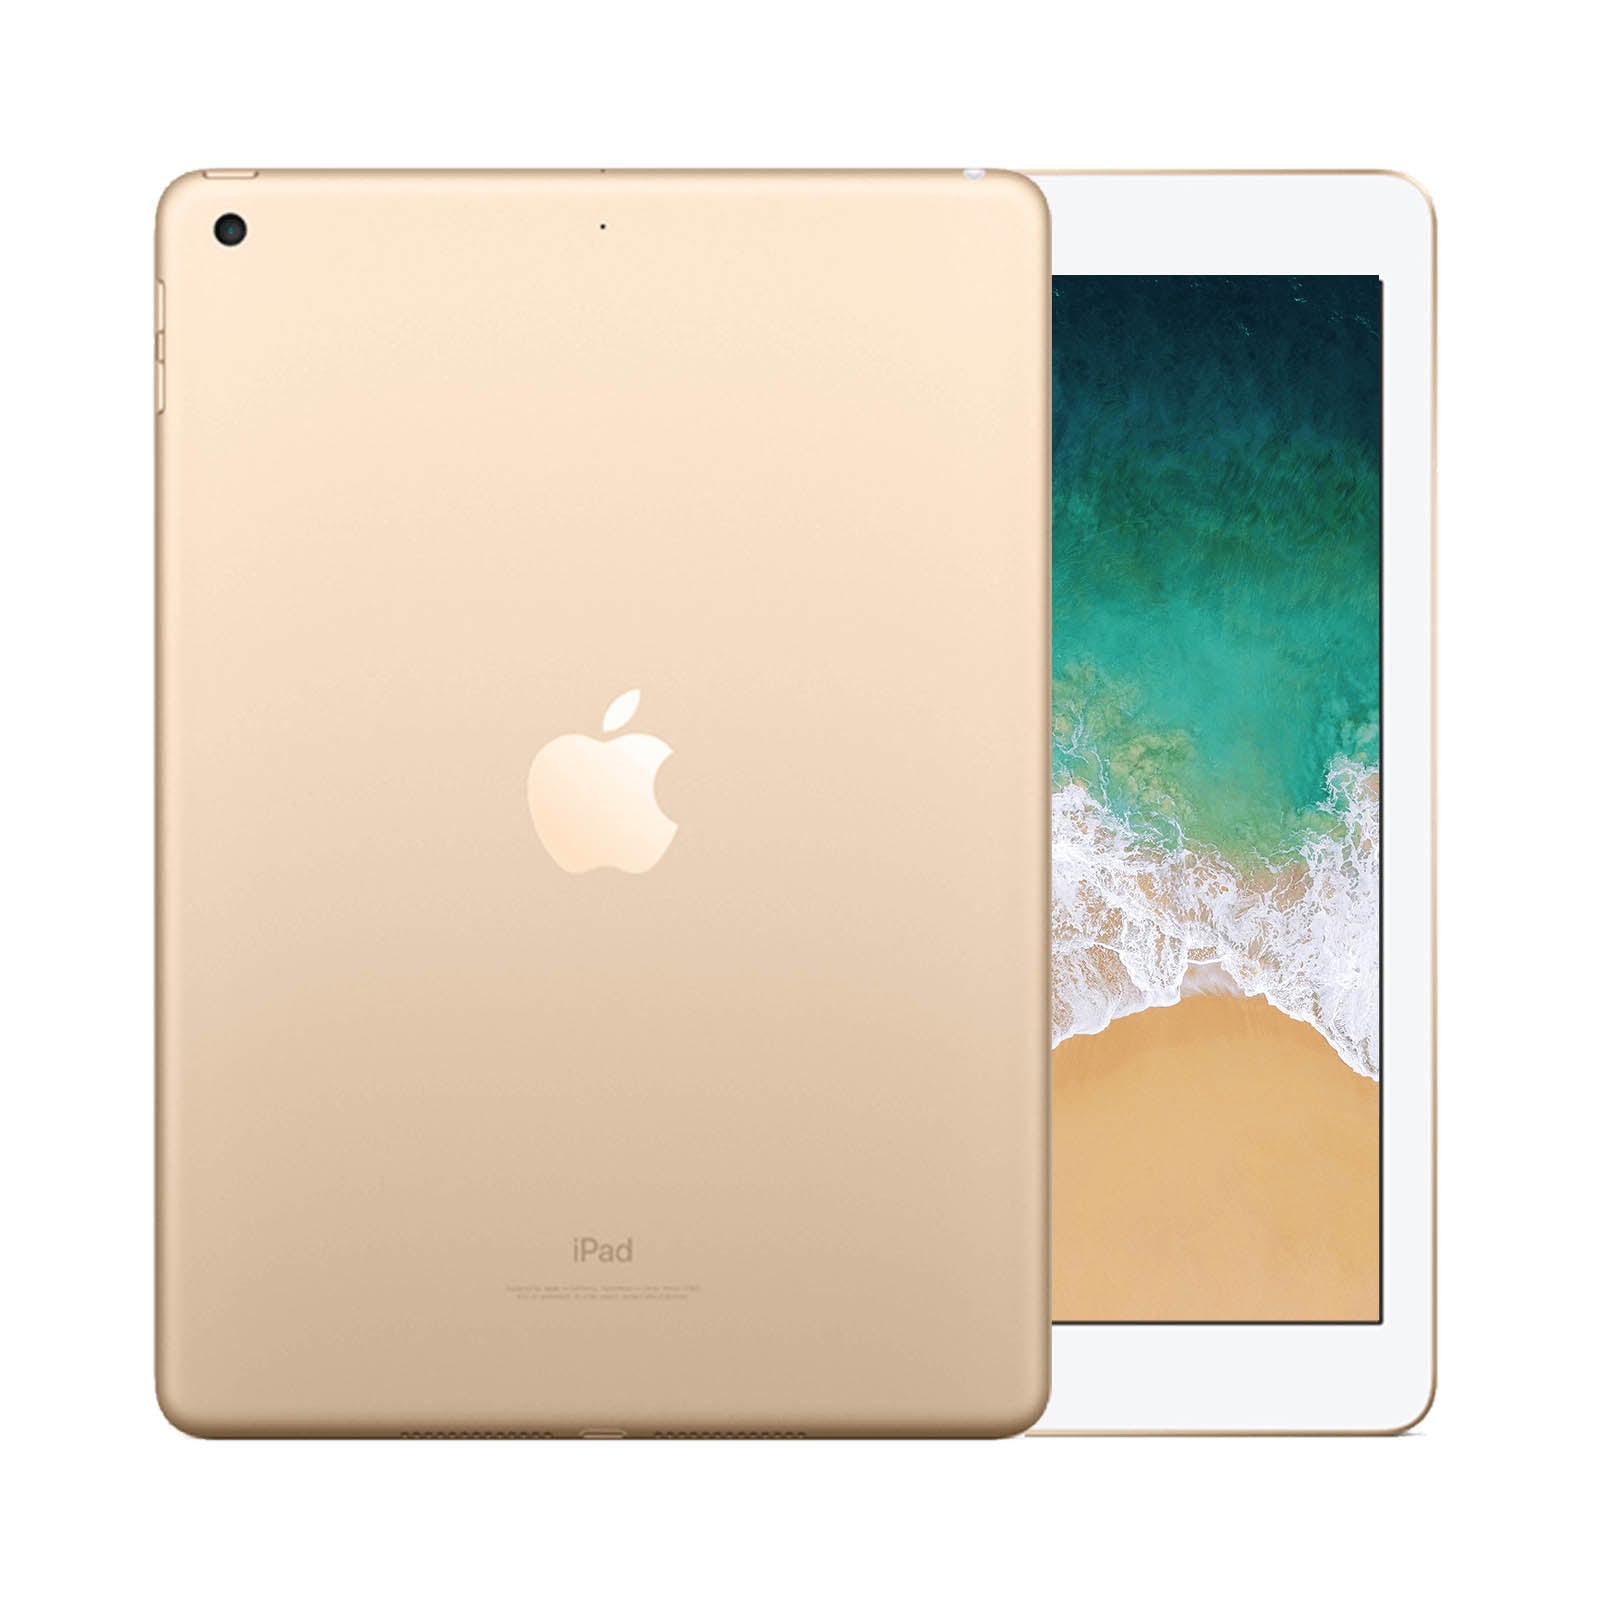 Apple iPad 5 128GB WiFi Gold - Very Good 128GB Gold Very Good